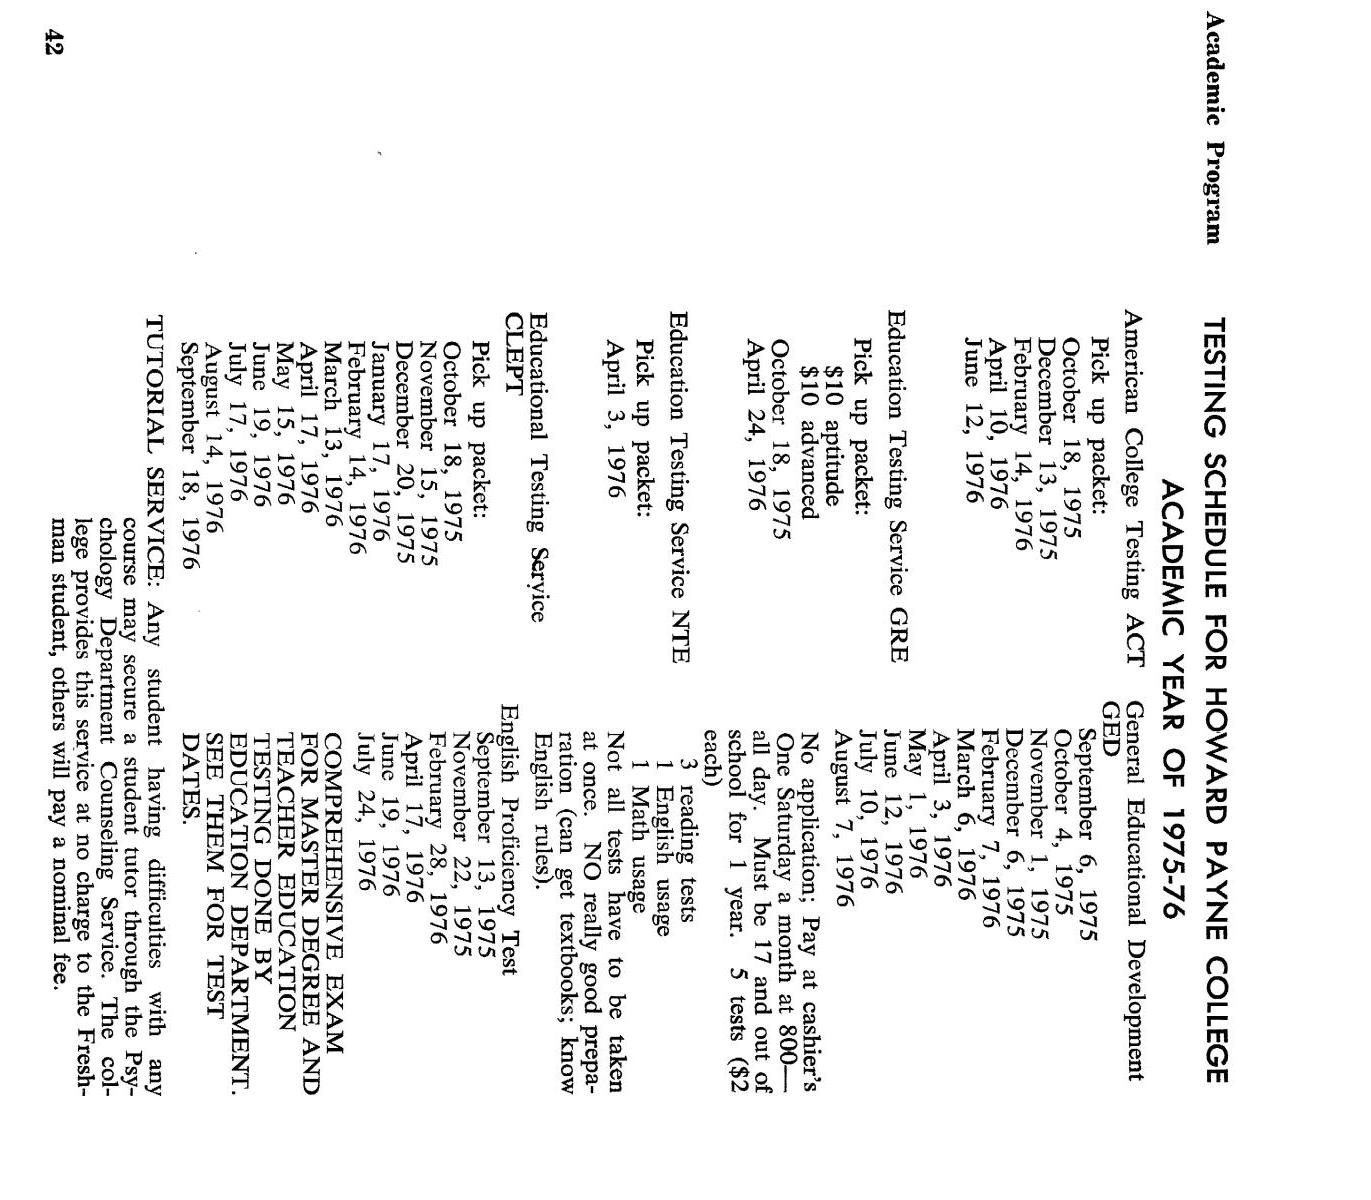 Catalogue of Howard Payne University, 1975-1976
                                                
                                                    42
                                                